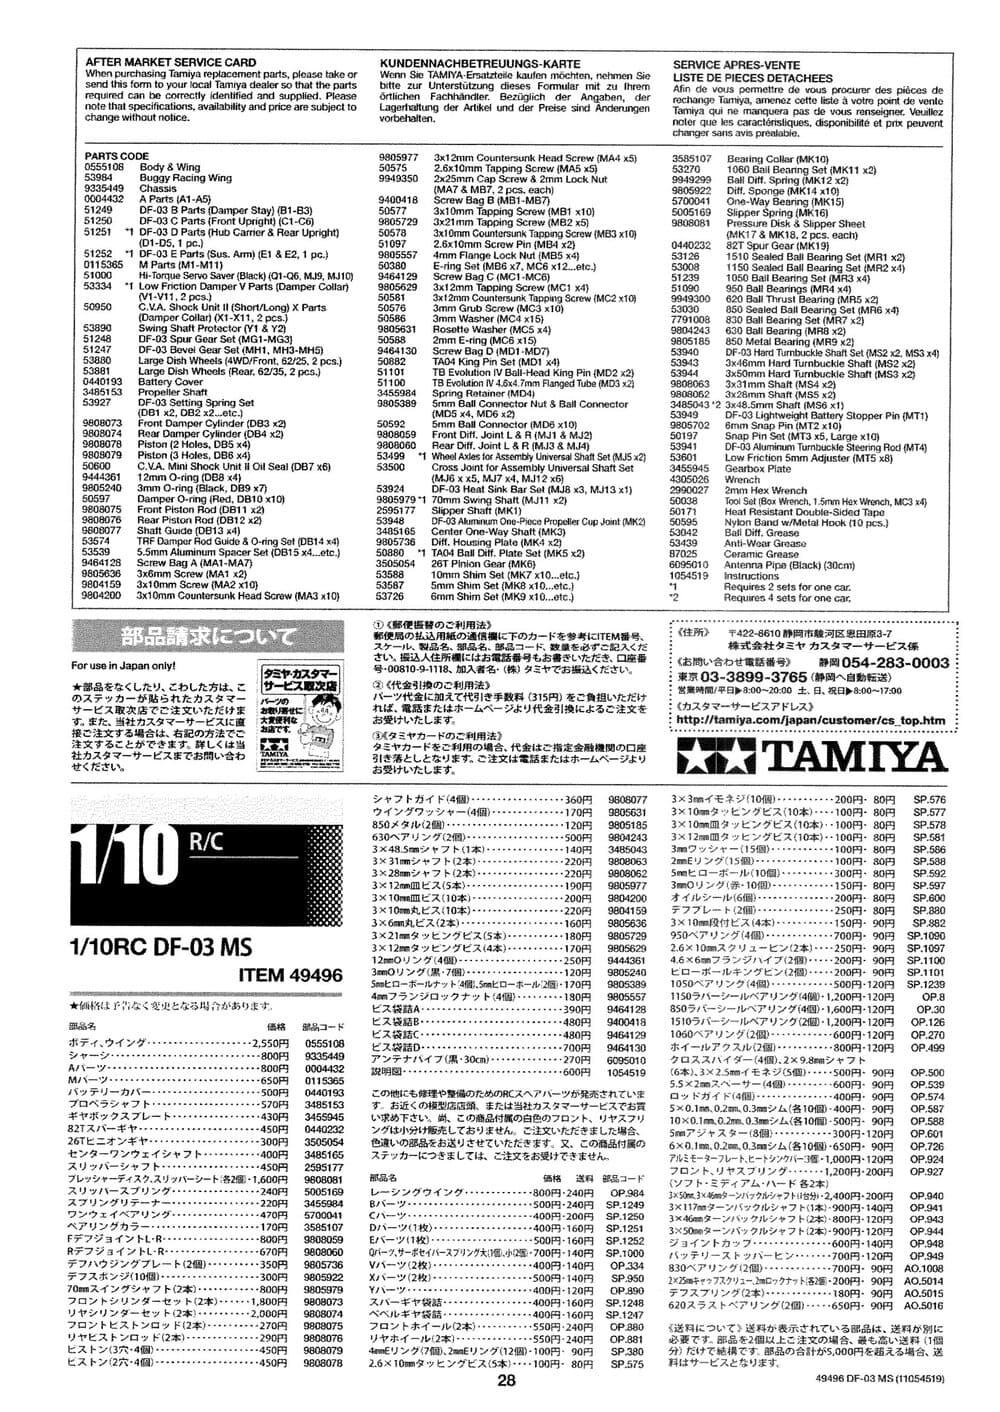 Tamiya - DF-03 MS Chassis Chassis - Manual - Page 28